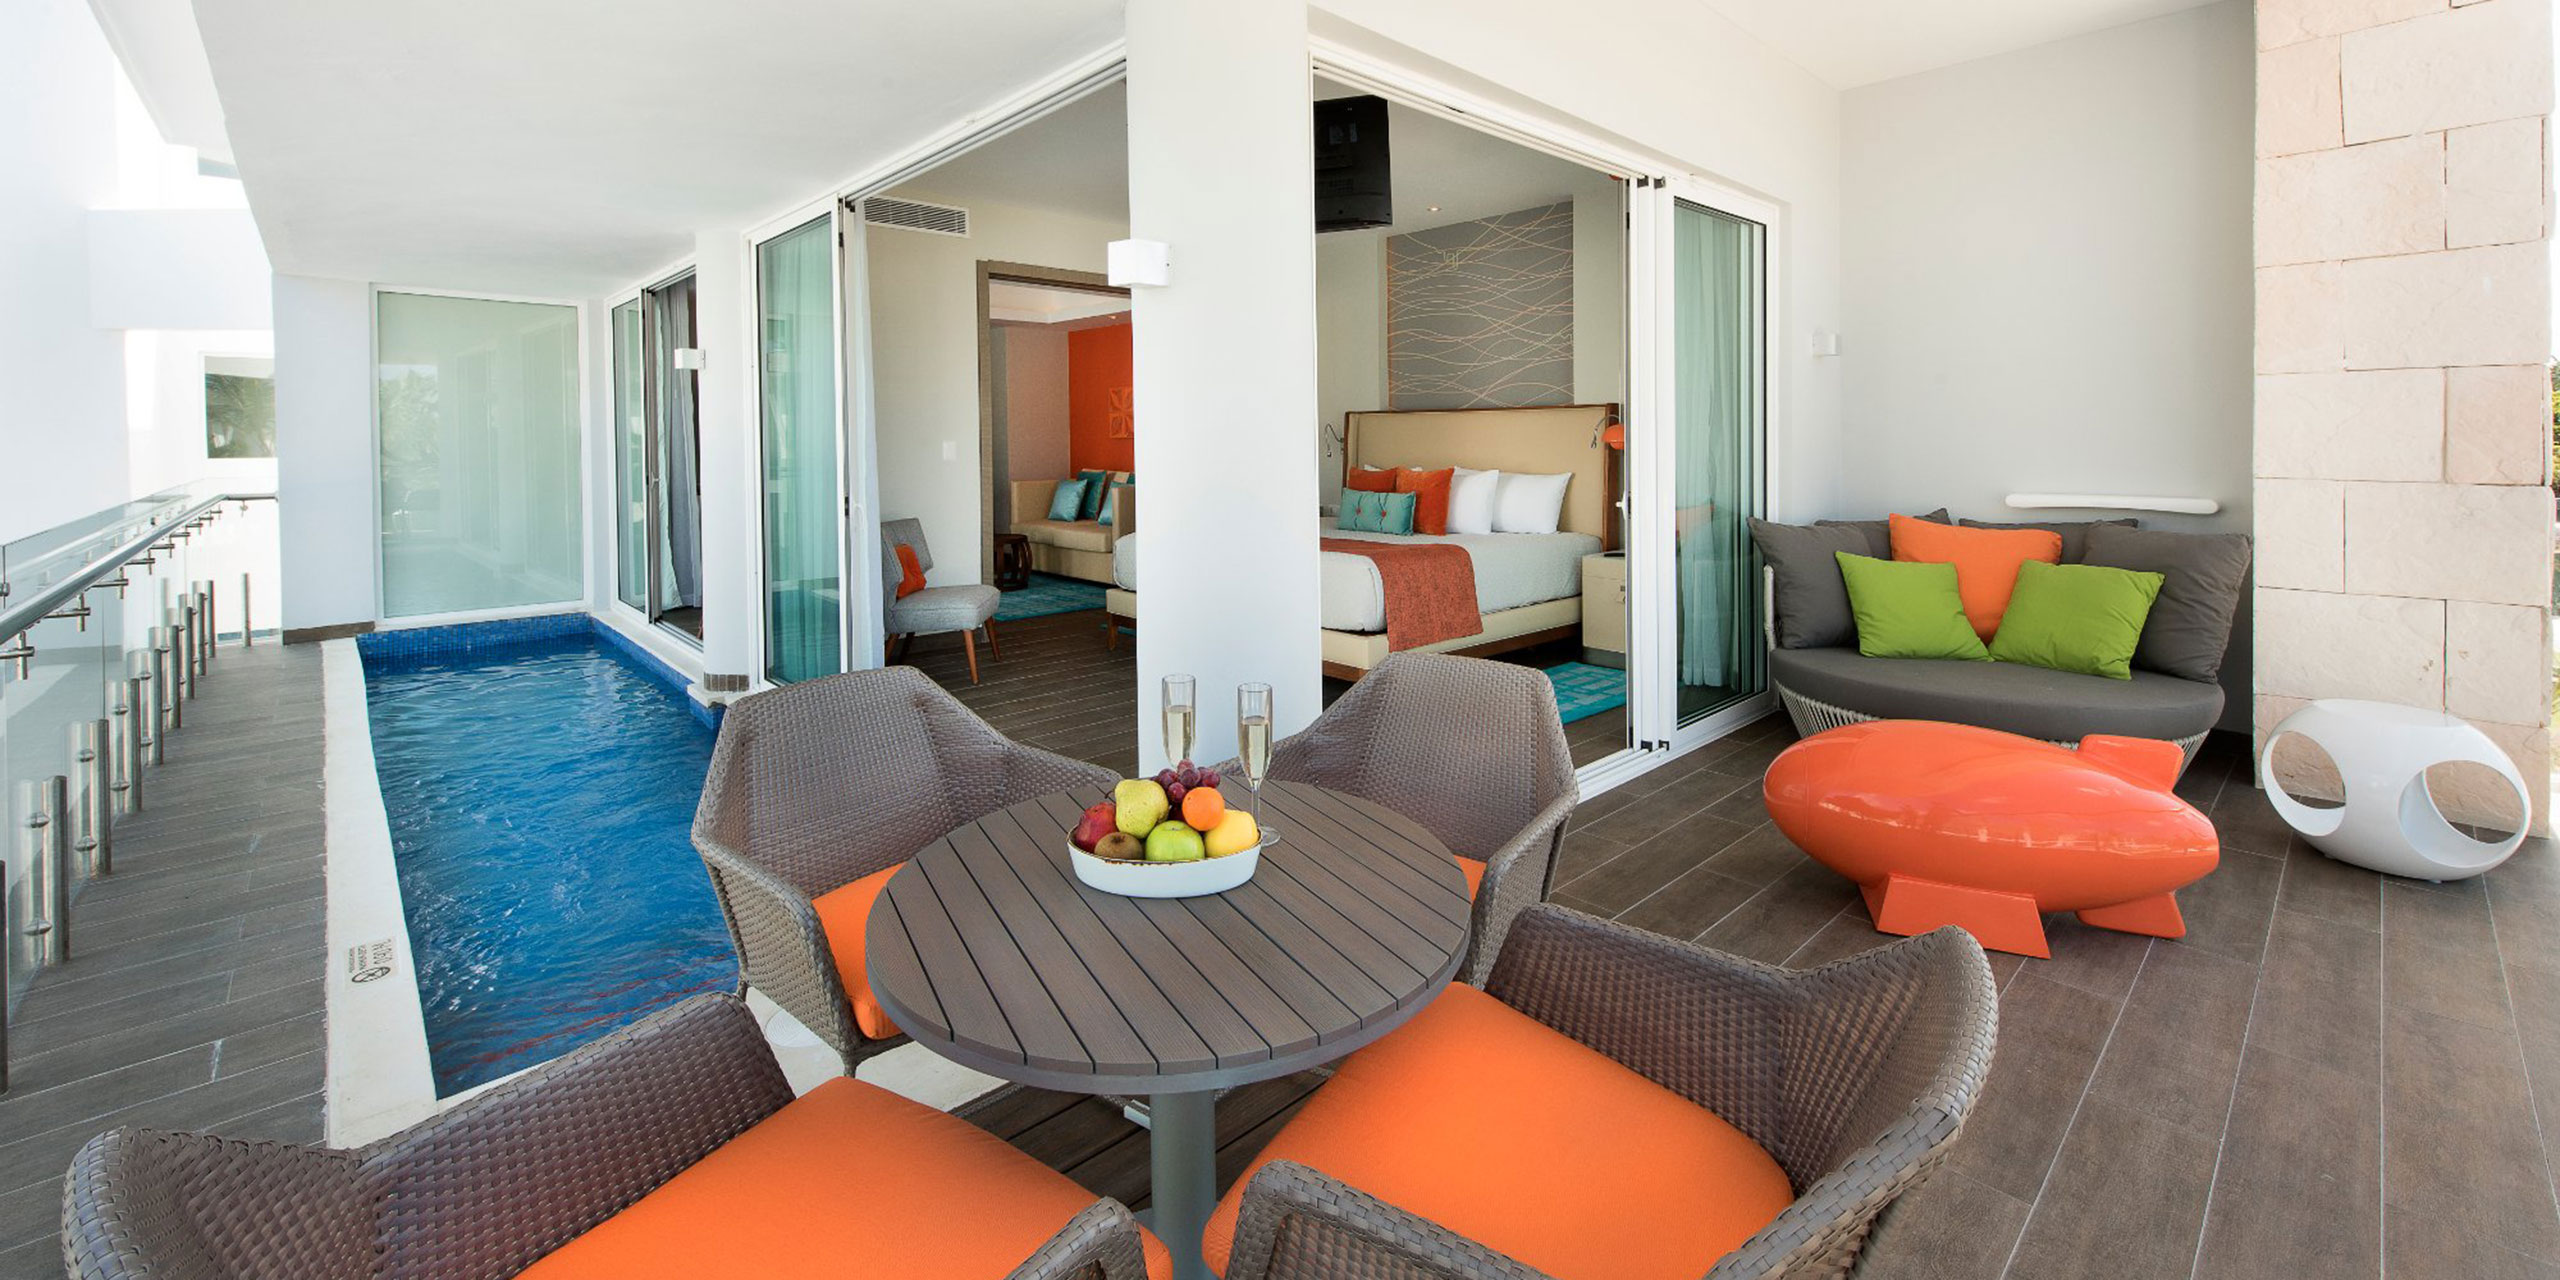 Suite at Nickelodeon Hotels and Resorts Punta Cana; Courtesy of Nickelodeon Hotels and Resorts Punta Cana